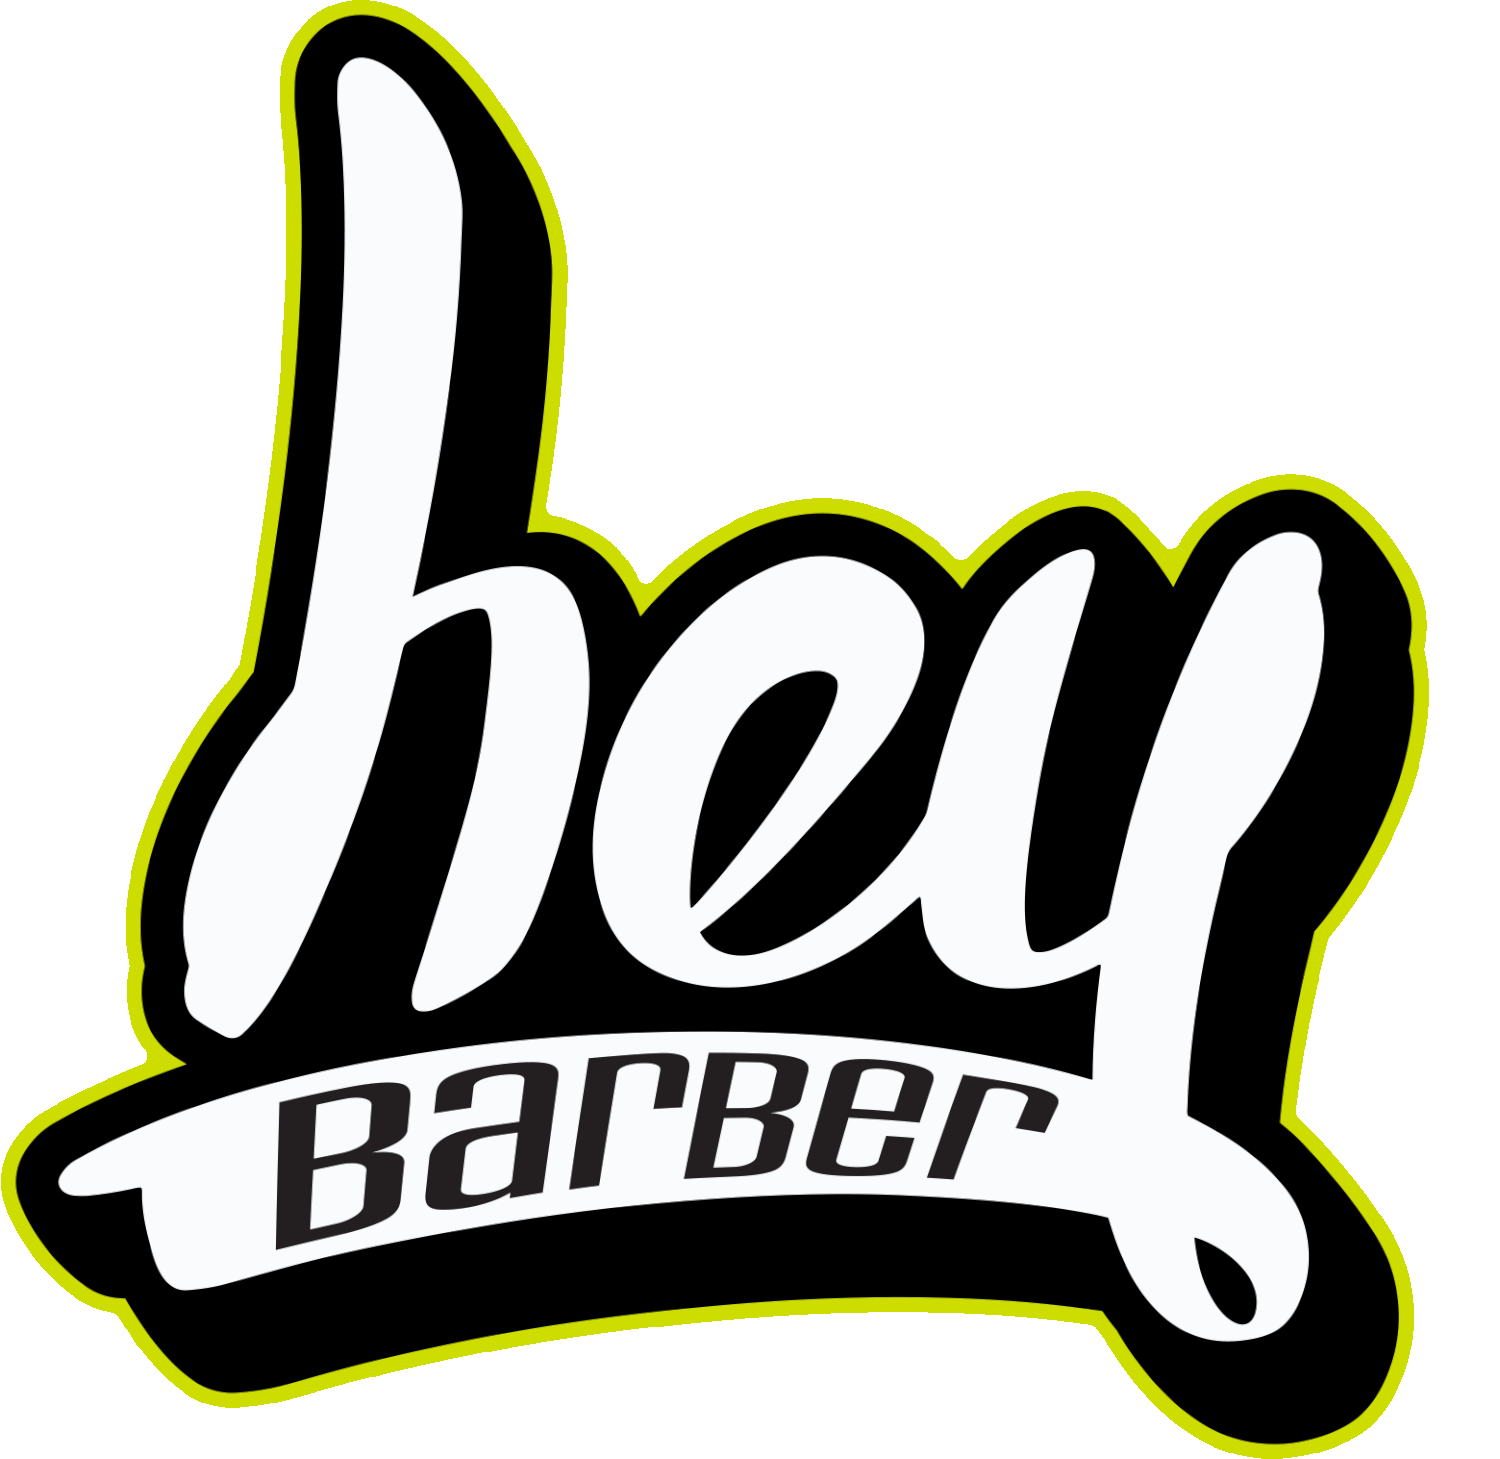 Hey Barber